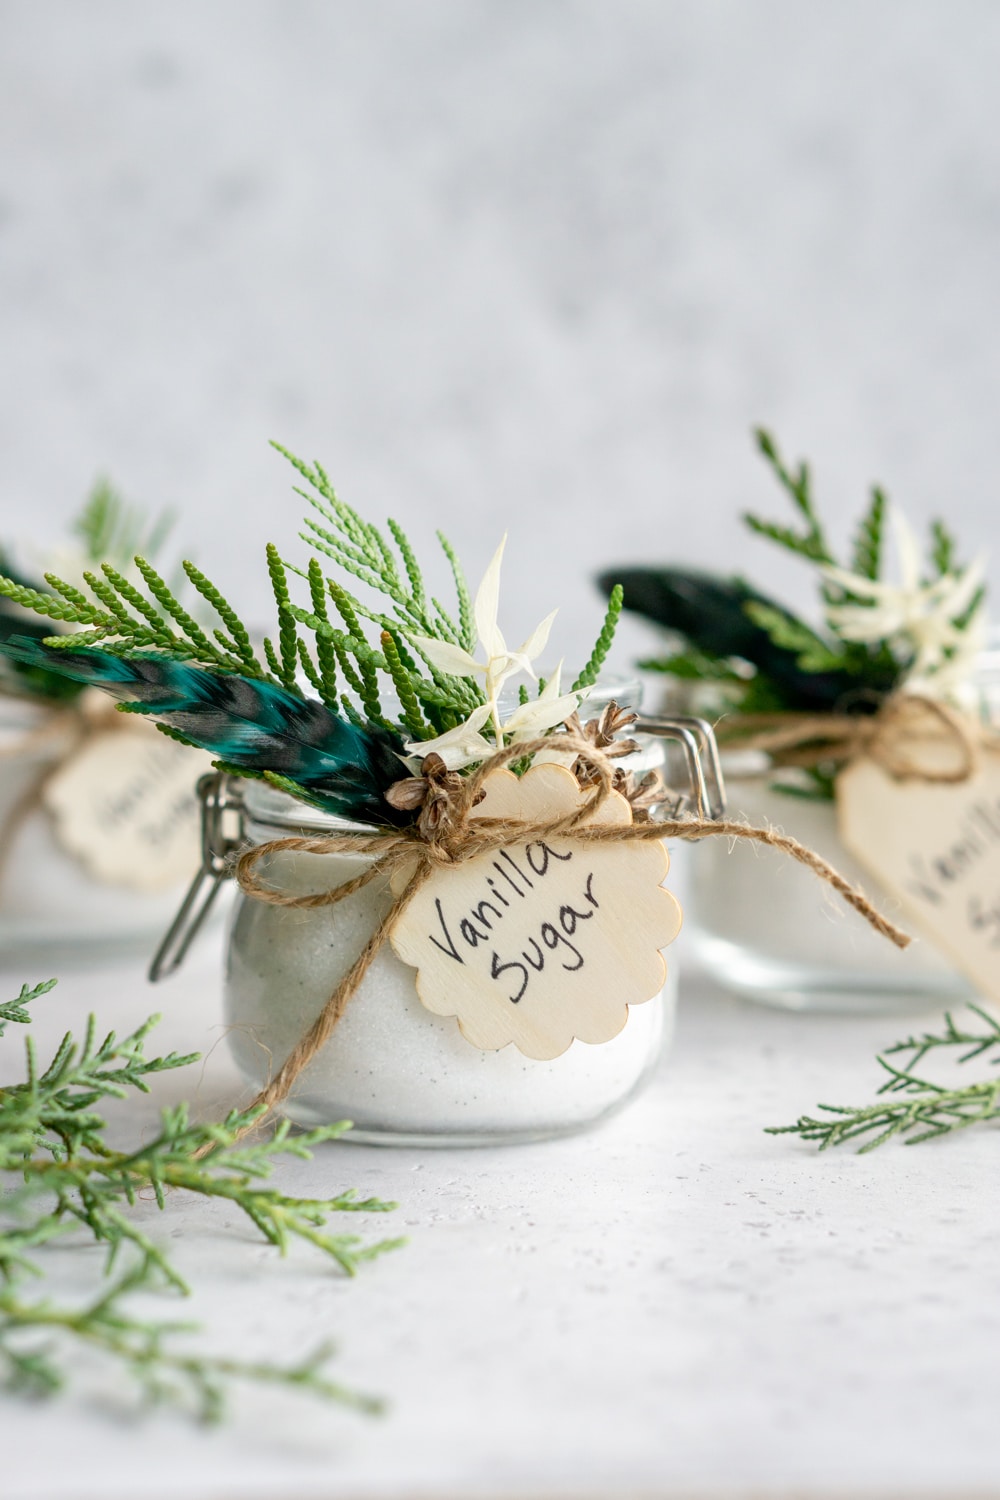 Three jars of vanilla sugar decorated with fresh greenery and tags